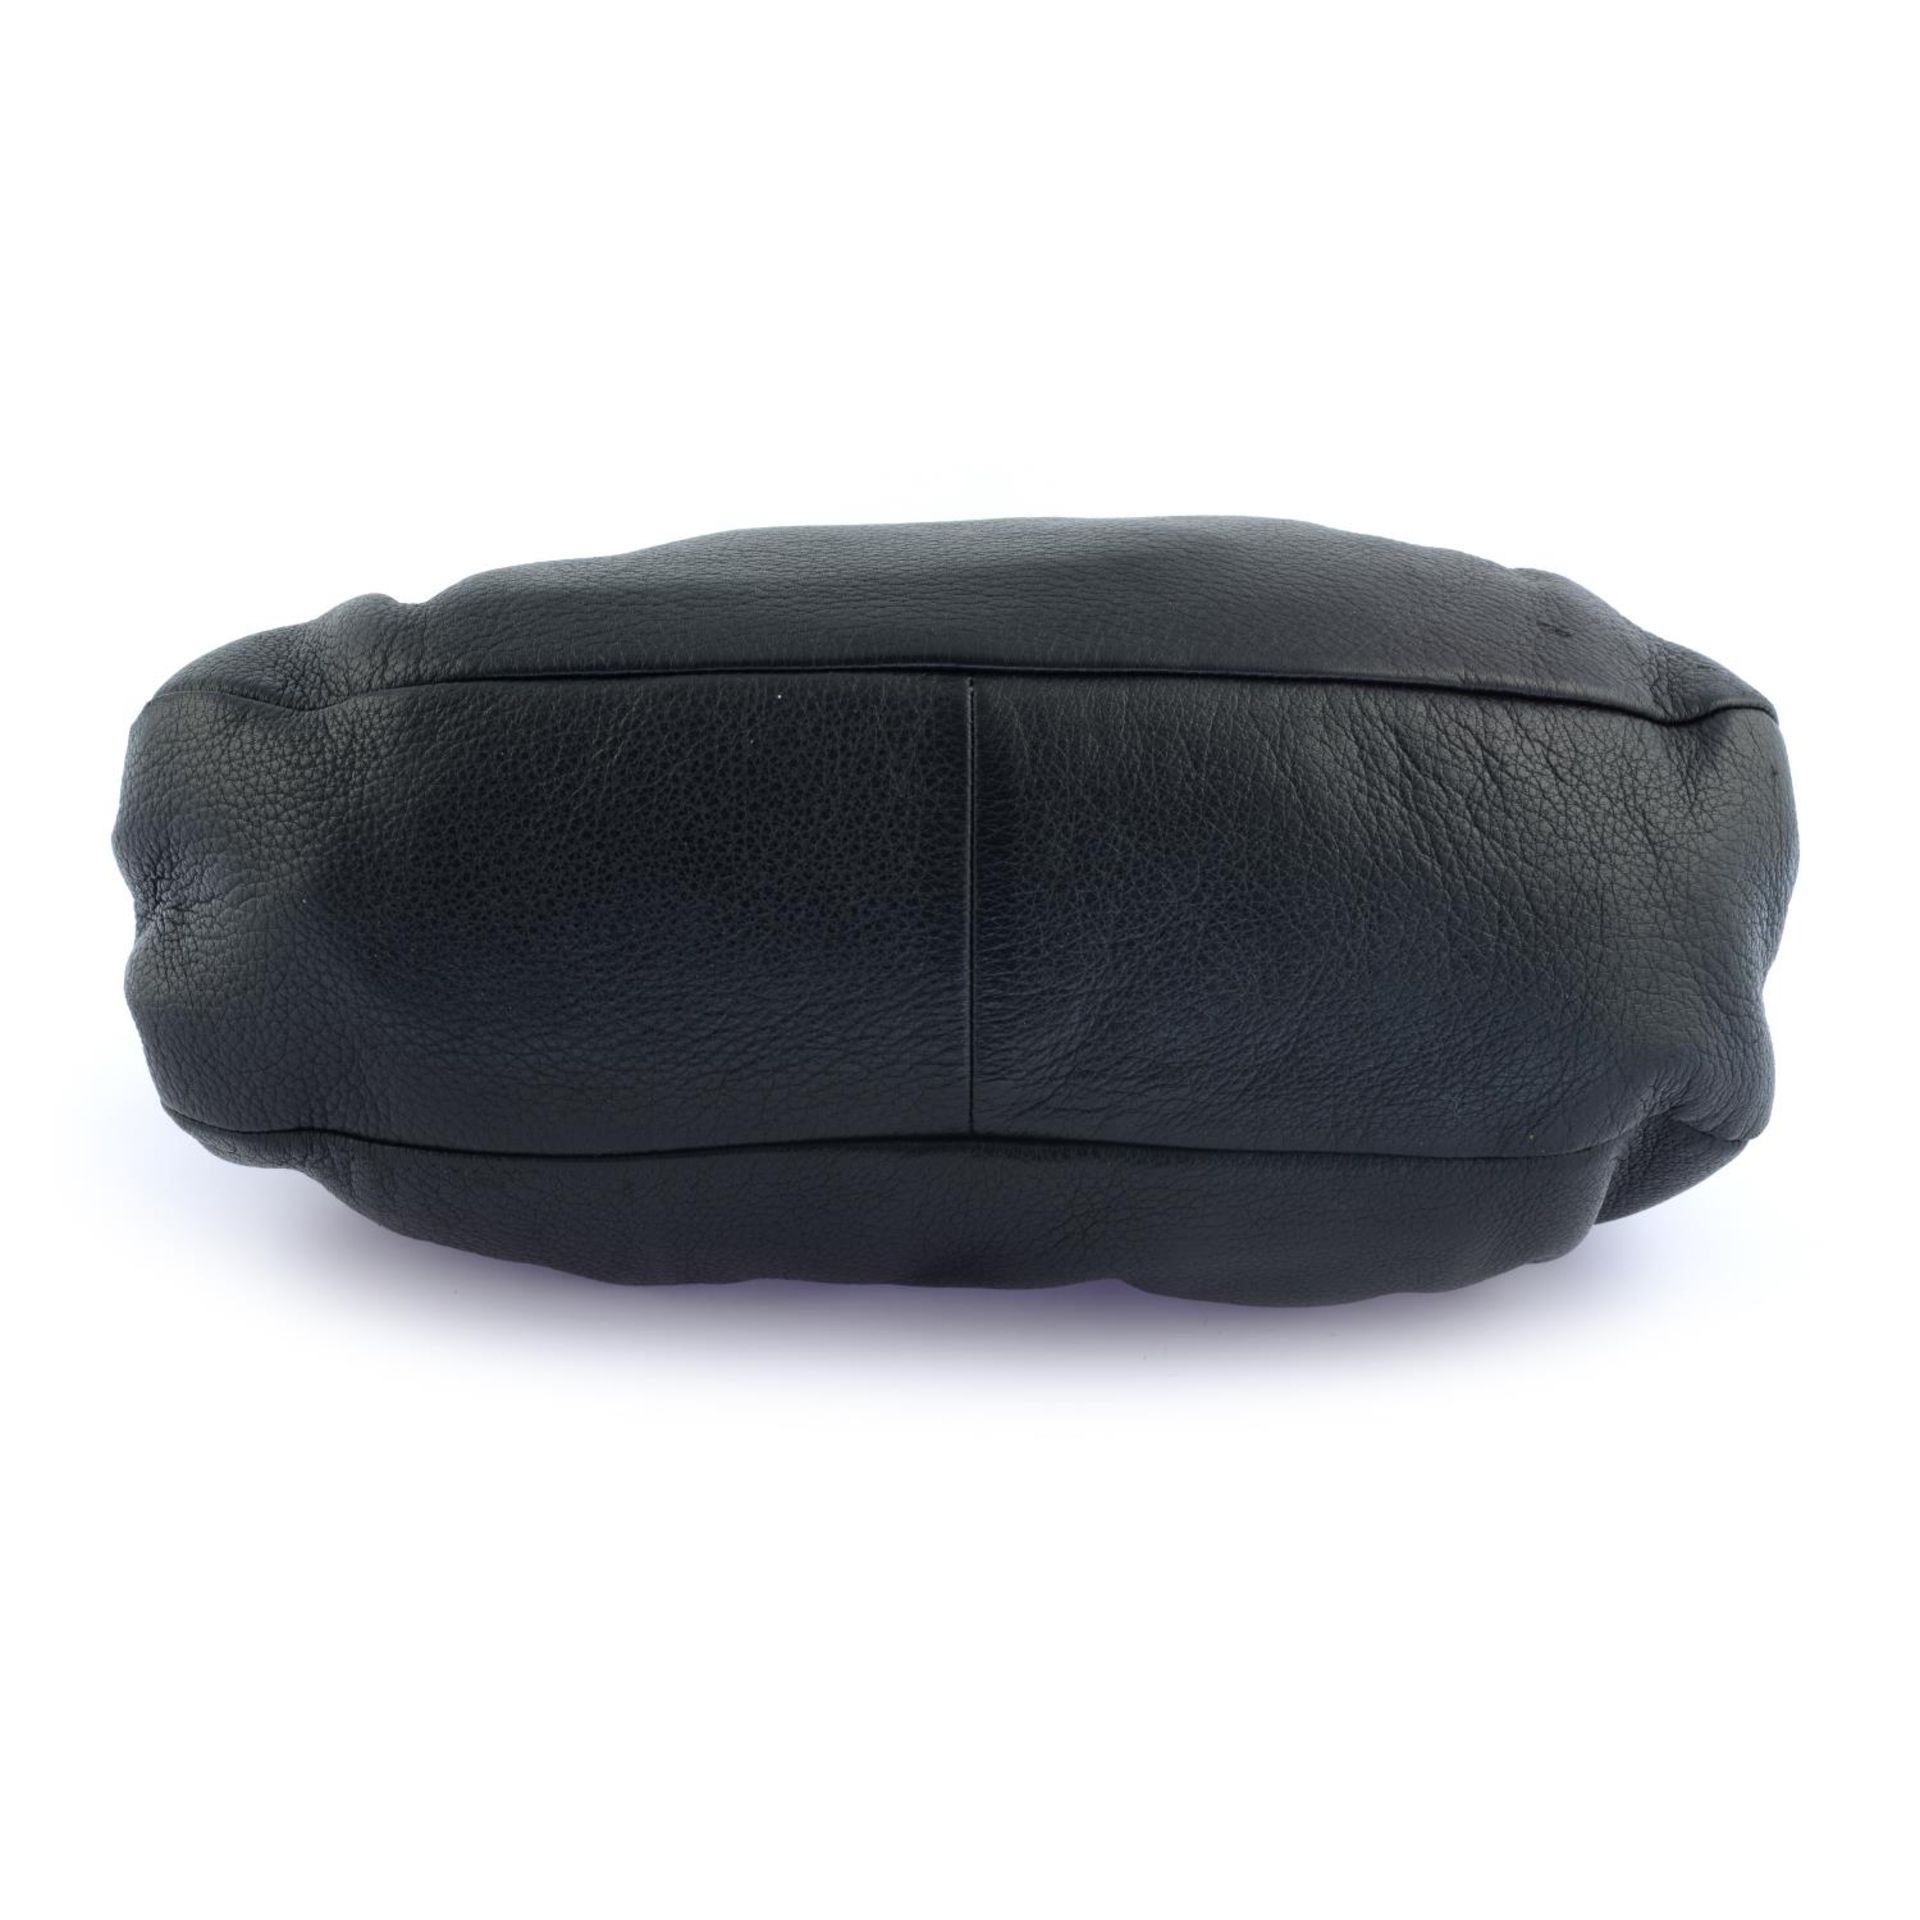 BOTTEGA VENETA - a black leather handbag. - Image 4 of 5